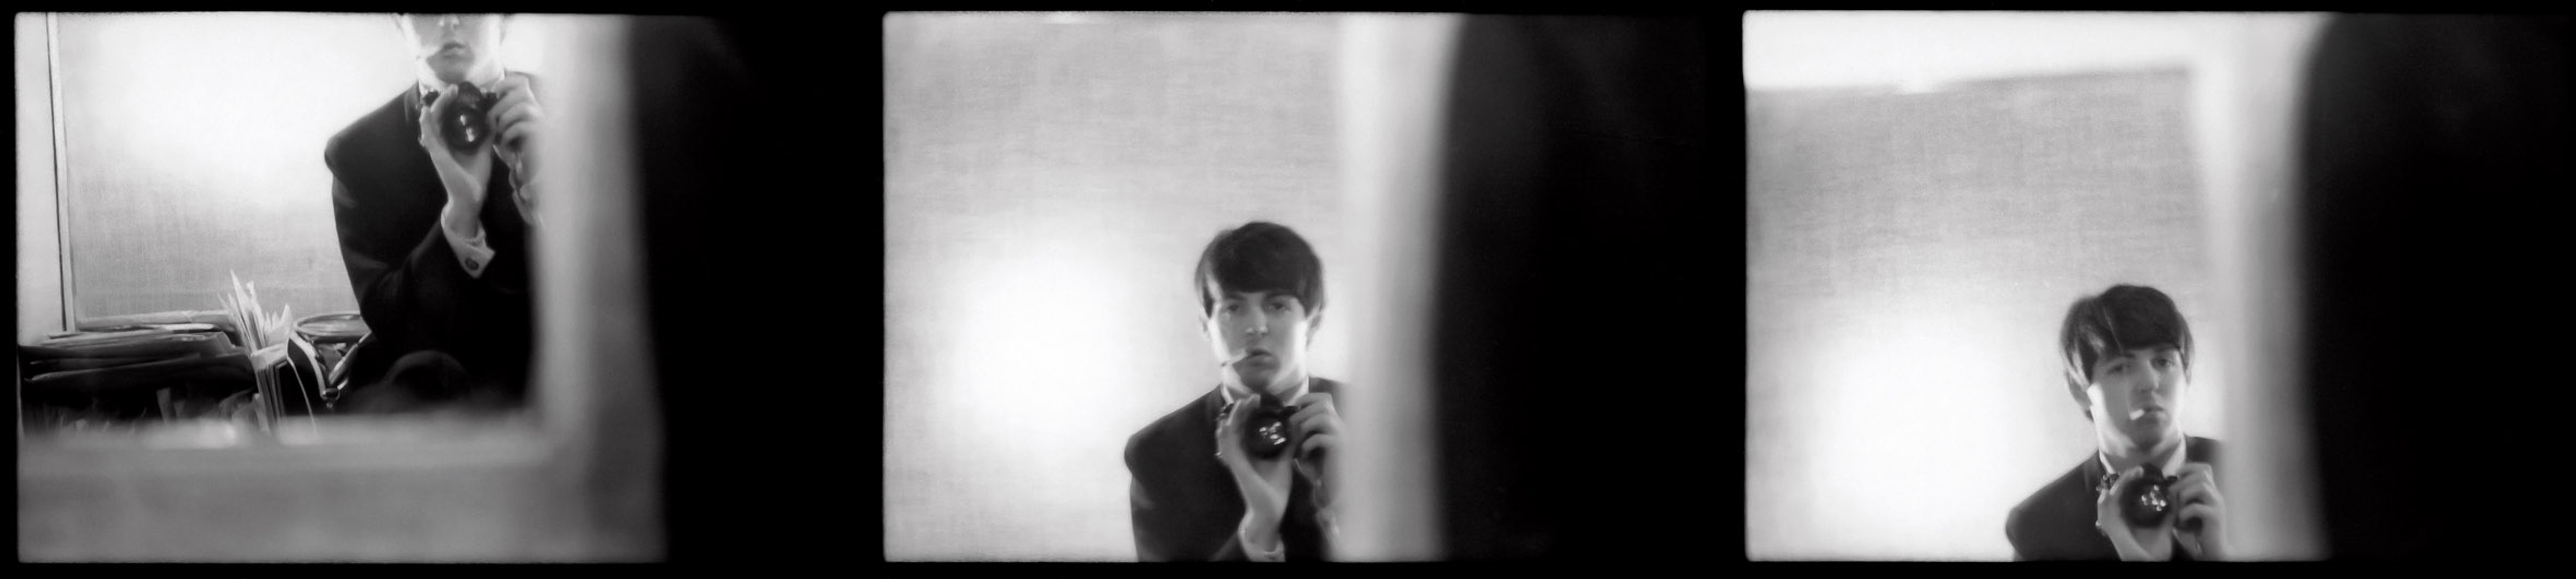 Triptych photograph of Paul McCartney taken by himself